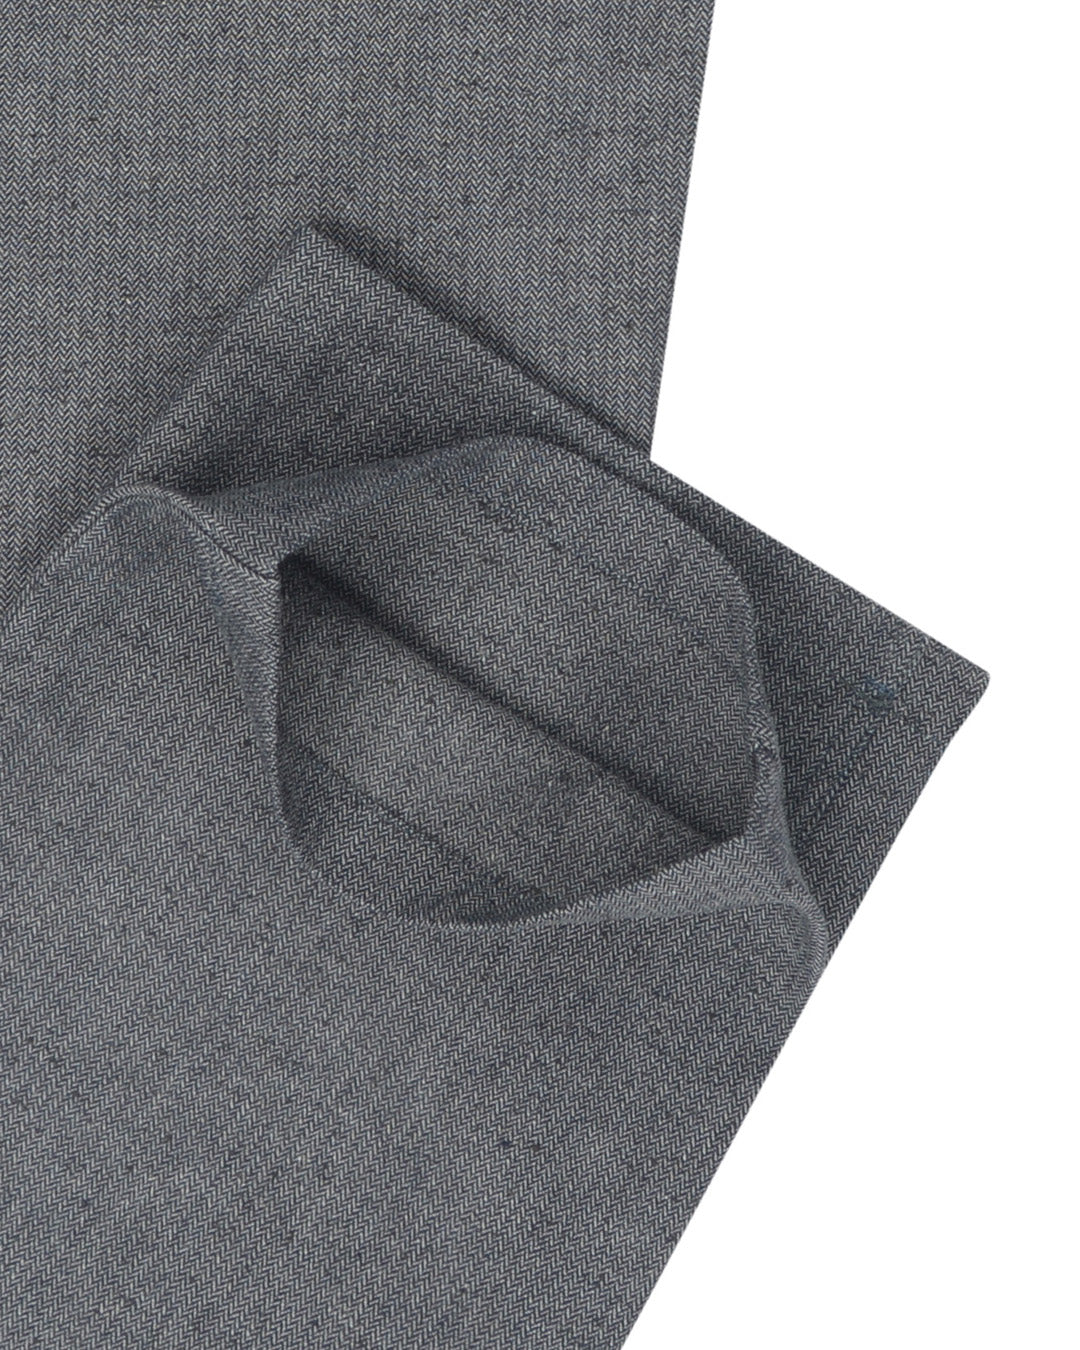 Denim: Navy Grey Slub Herringbone Jeans PRESET STYLE